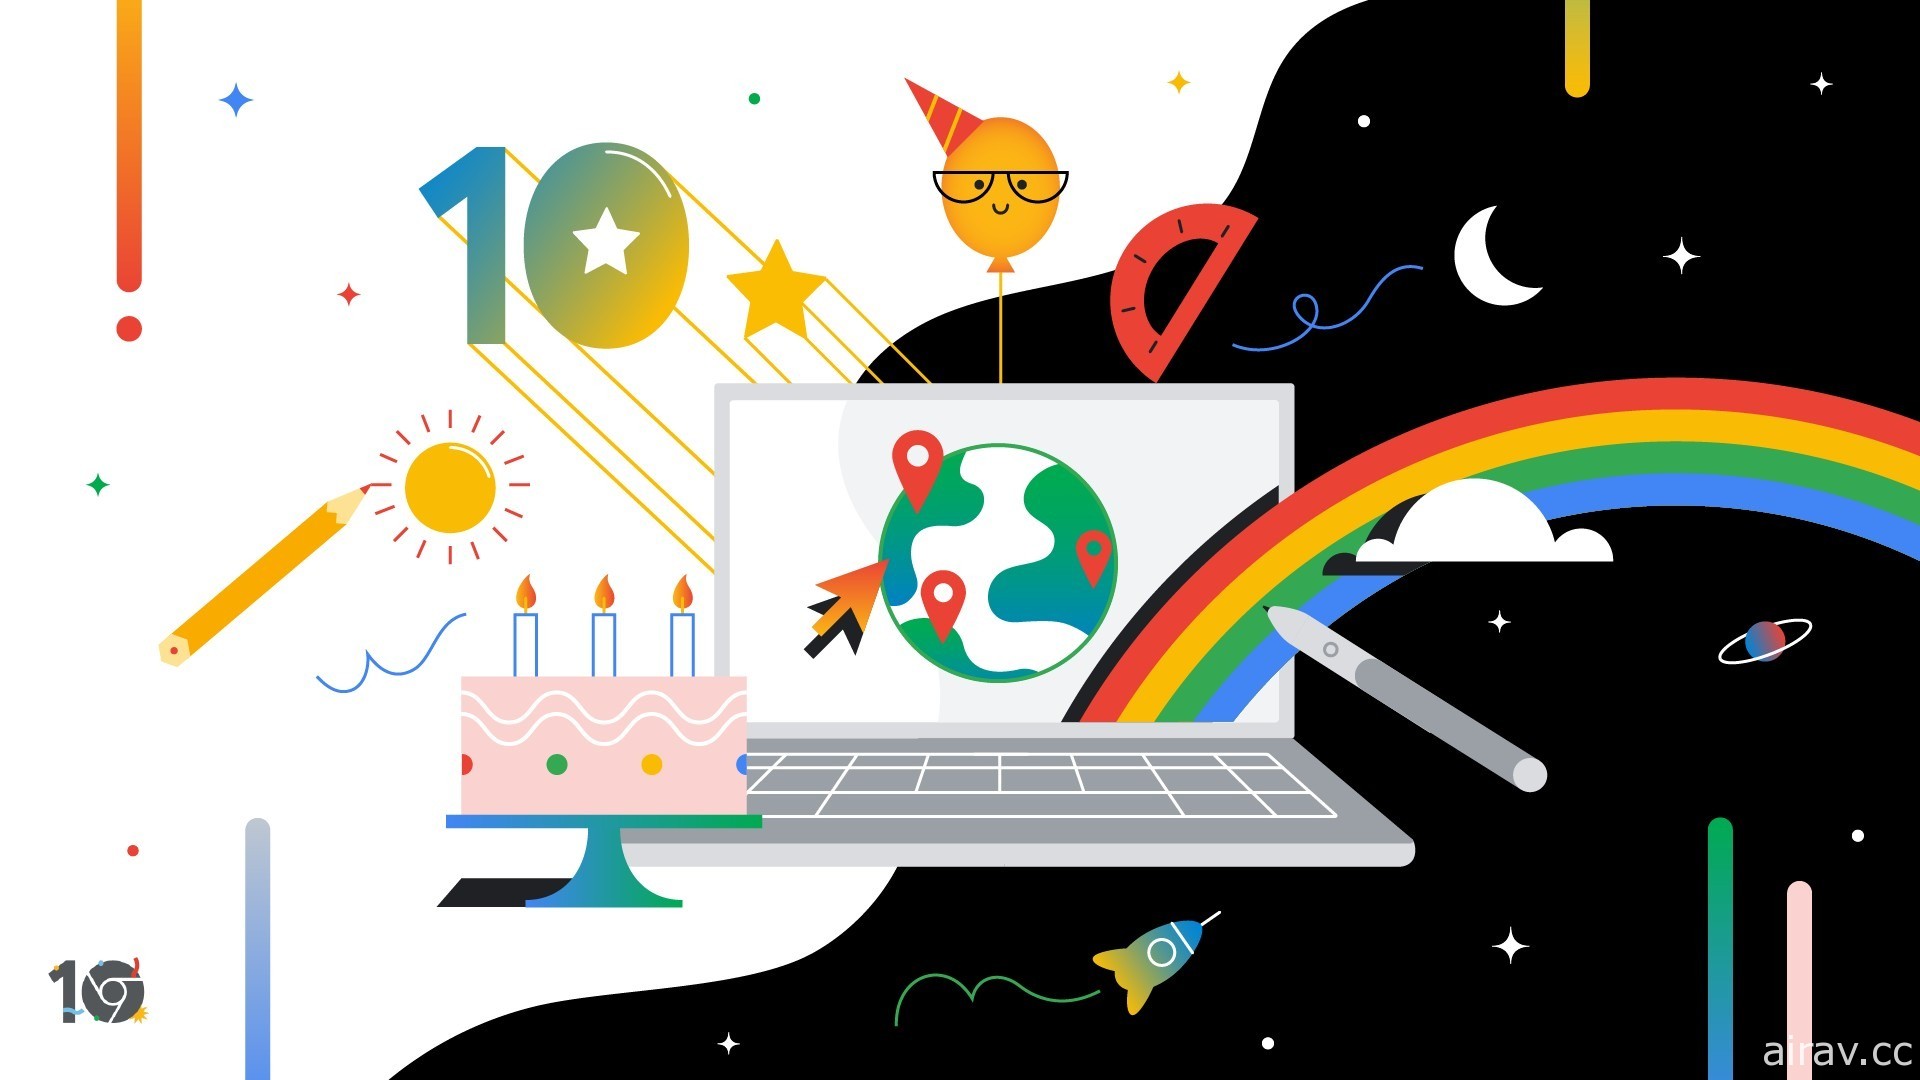 Chromebooks 邁入 10 週年 英特爾宣布將持續提供最佳化體驗